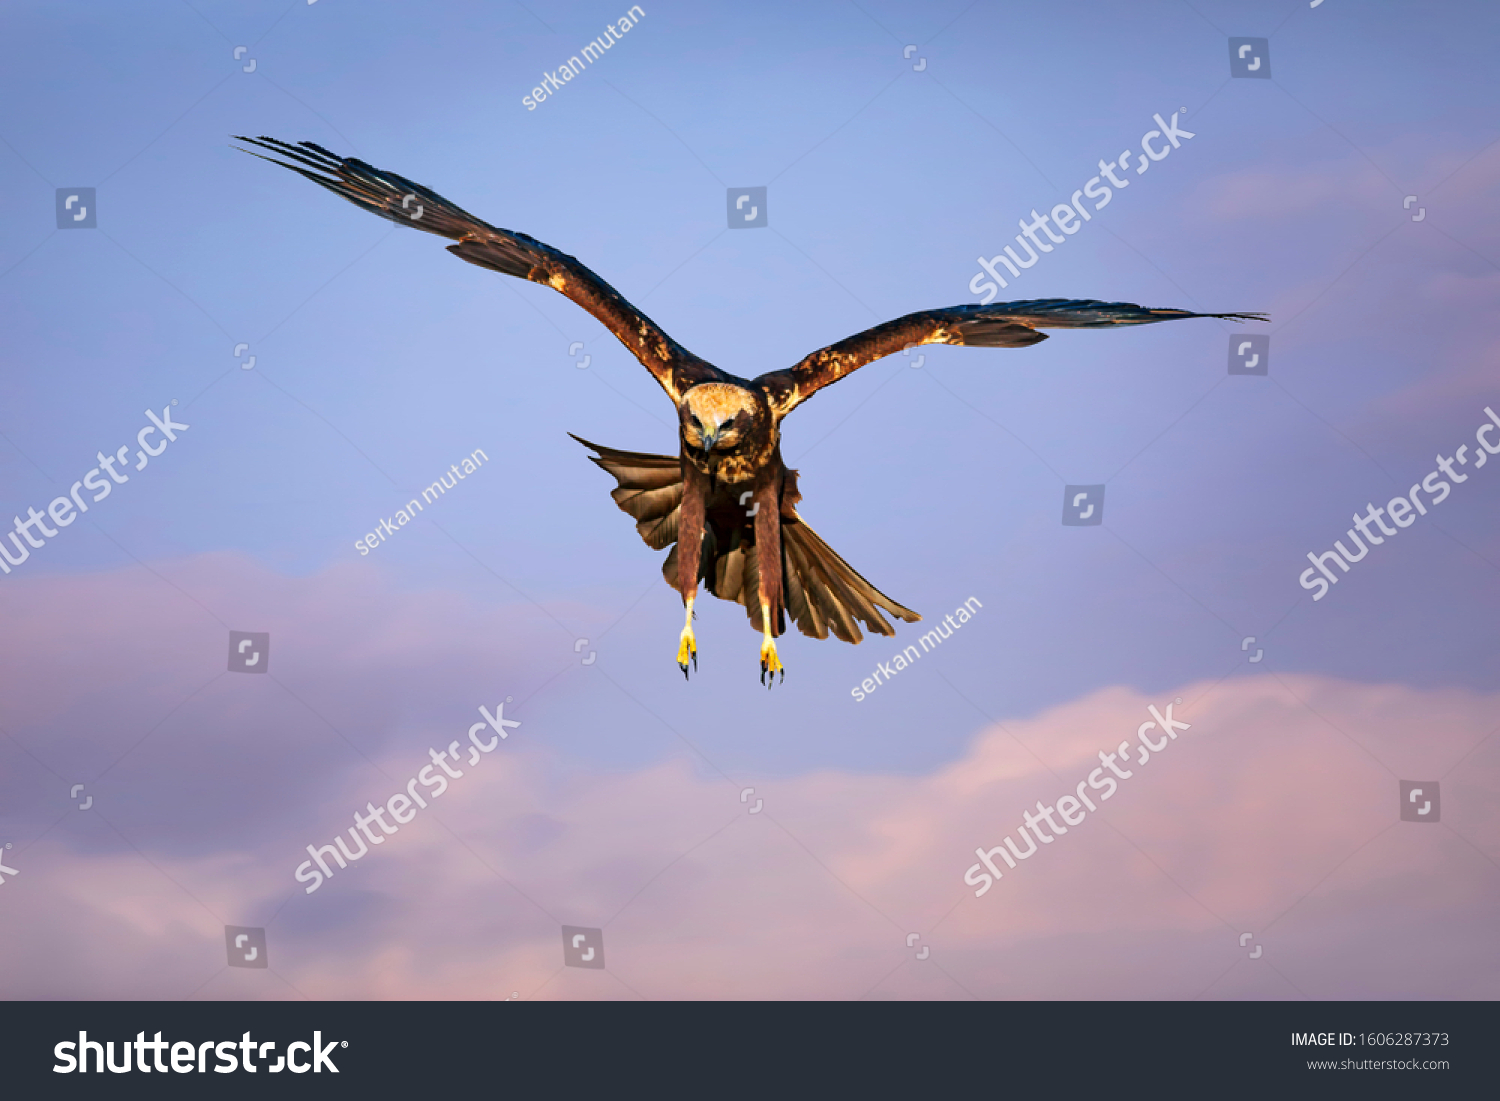 Flying bird. Bird of prey. Colorful sky background.  #1606287373